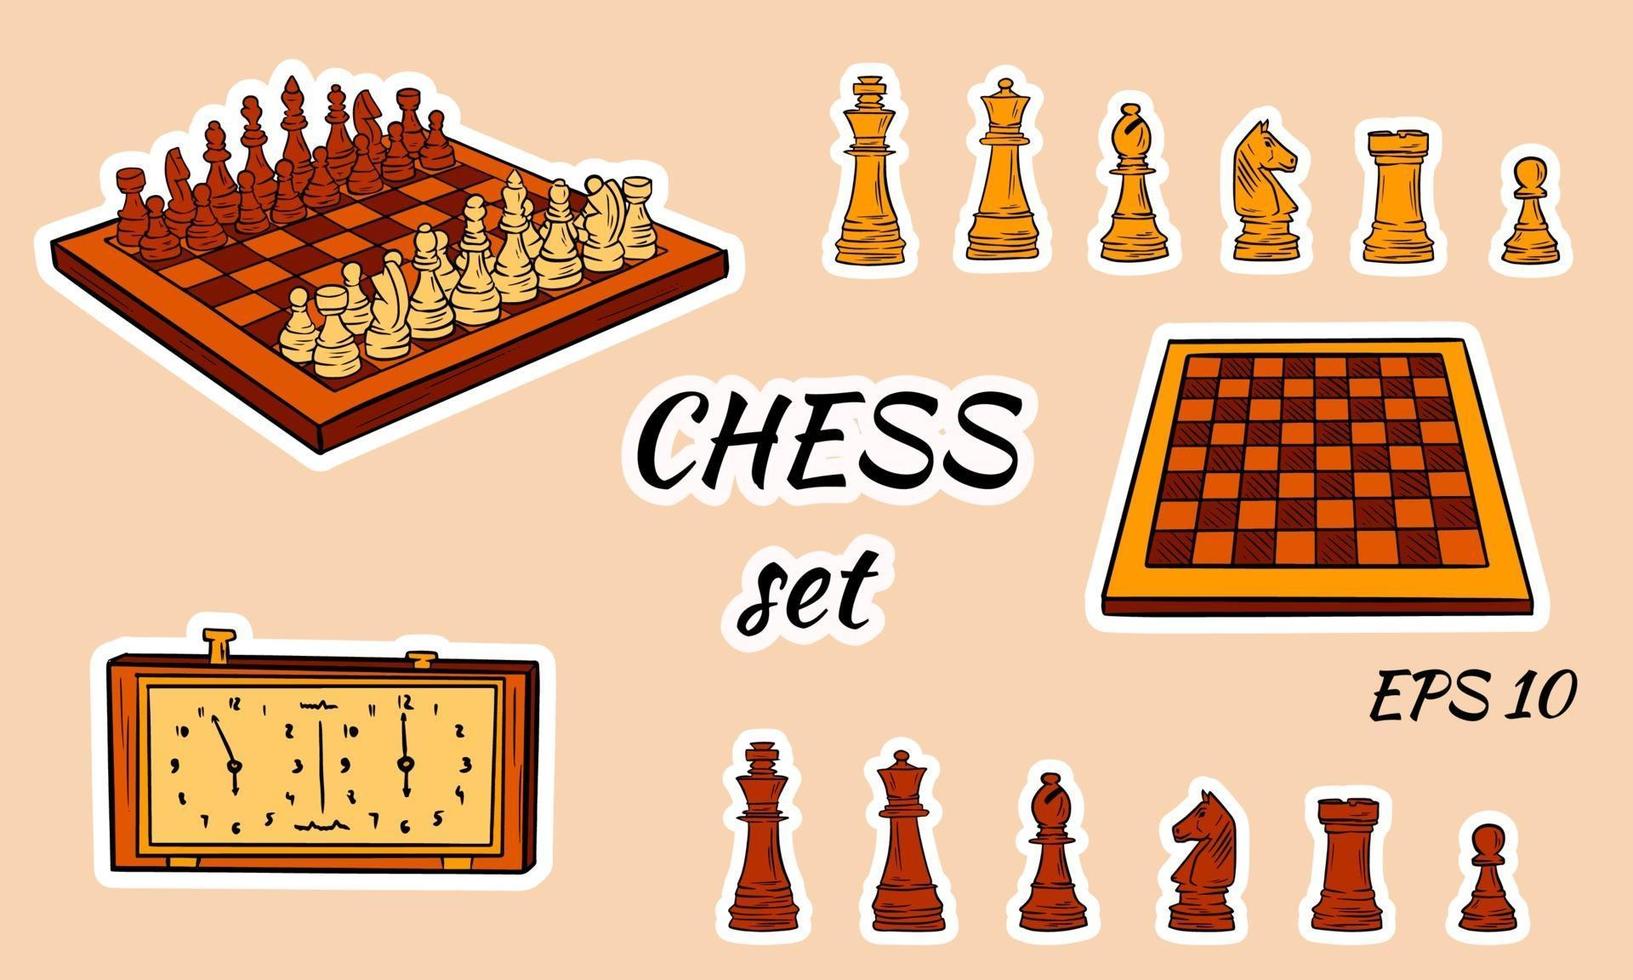 conjunto de peças de xadrez de desenho animado 2273947 Vetor no Vecteezy